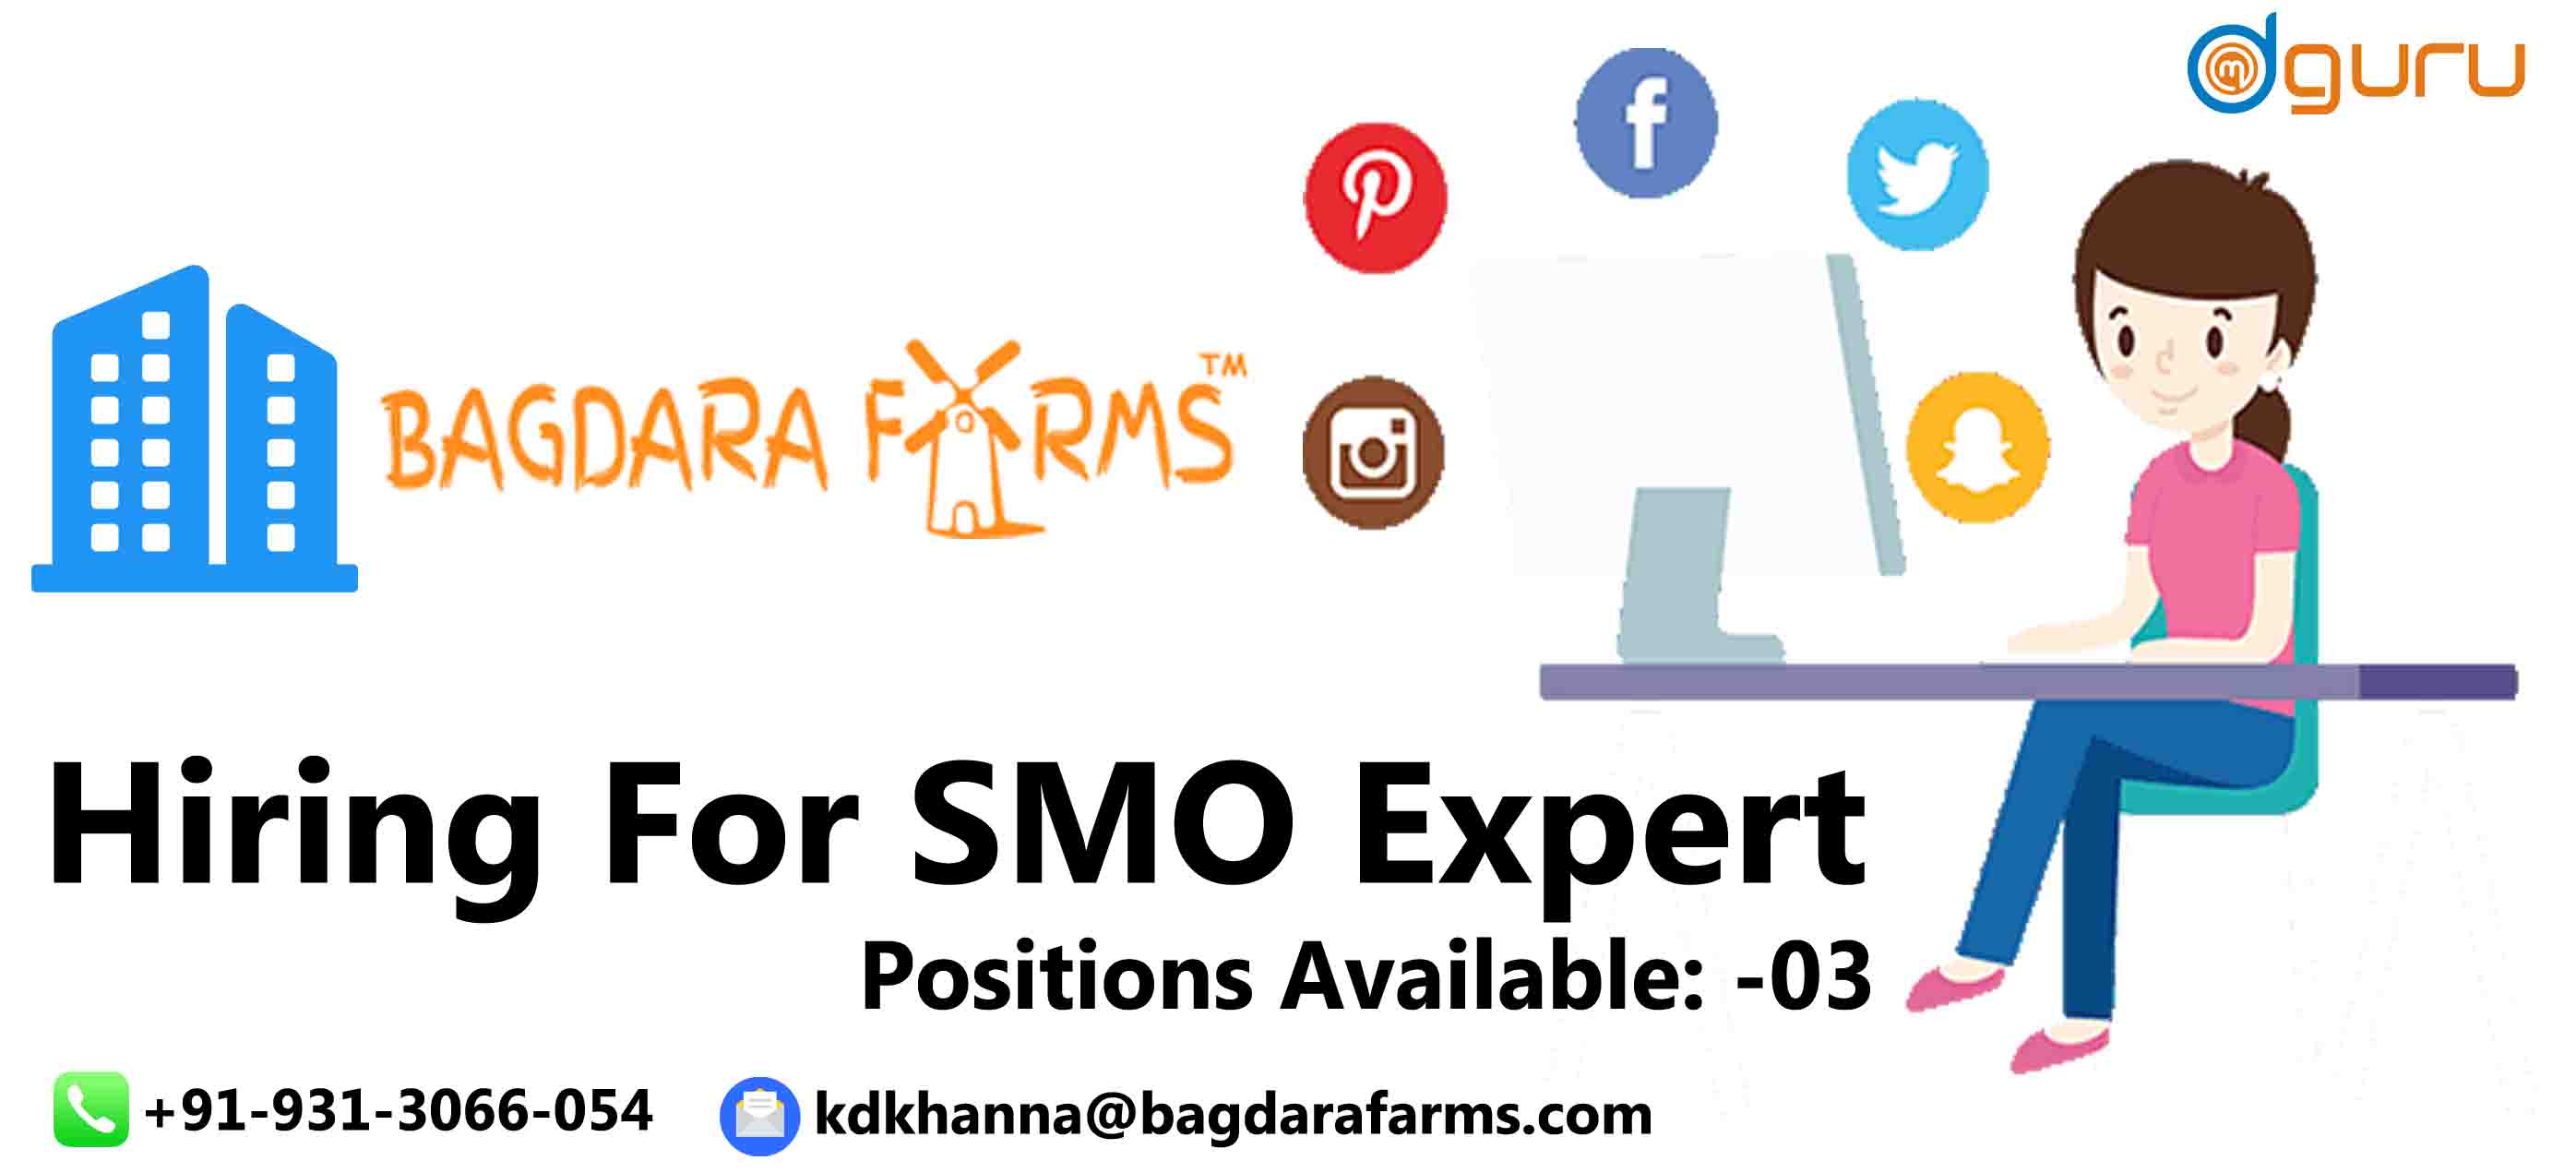 SMO Expert Vacancy/Job at Bagadara Farms New Delhi, India